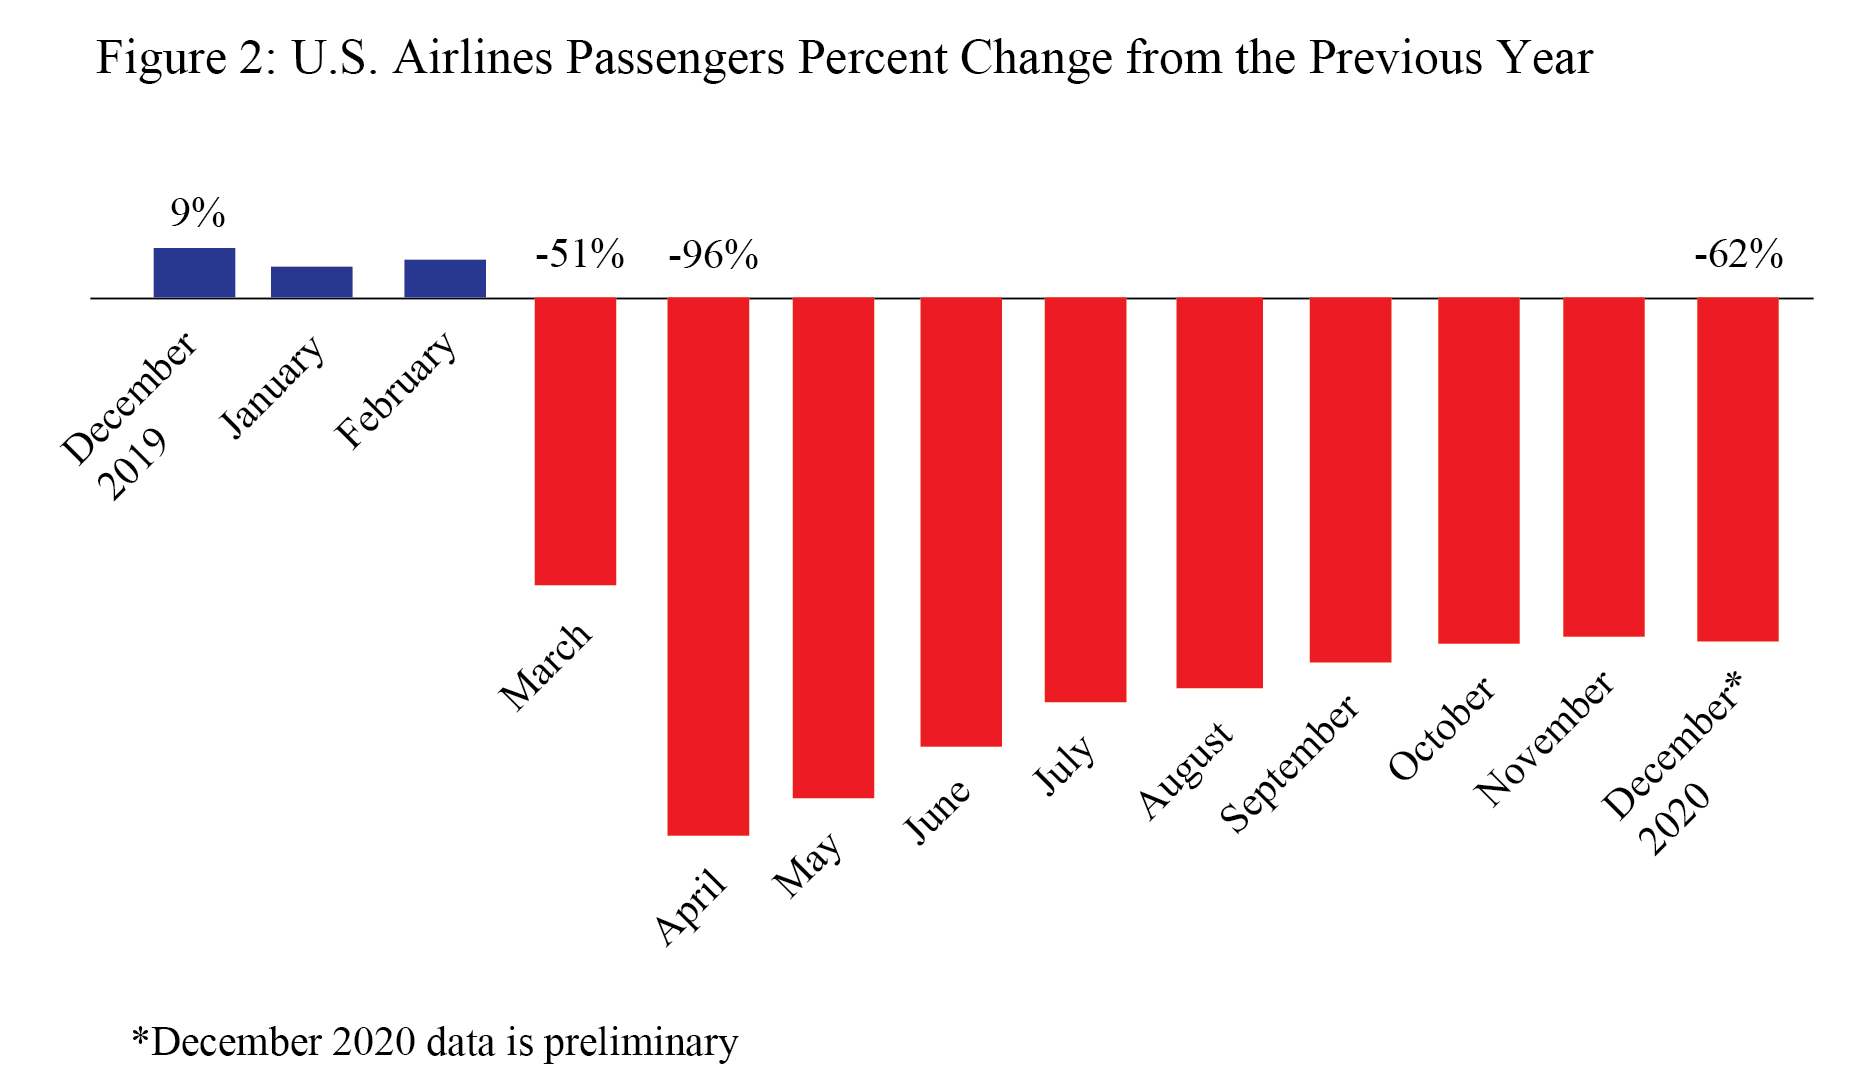 U.S. Airline Passengers, December 2020 (Preliminary)